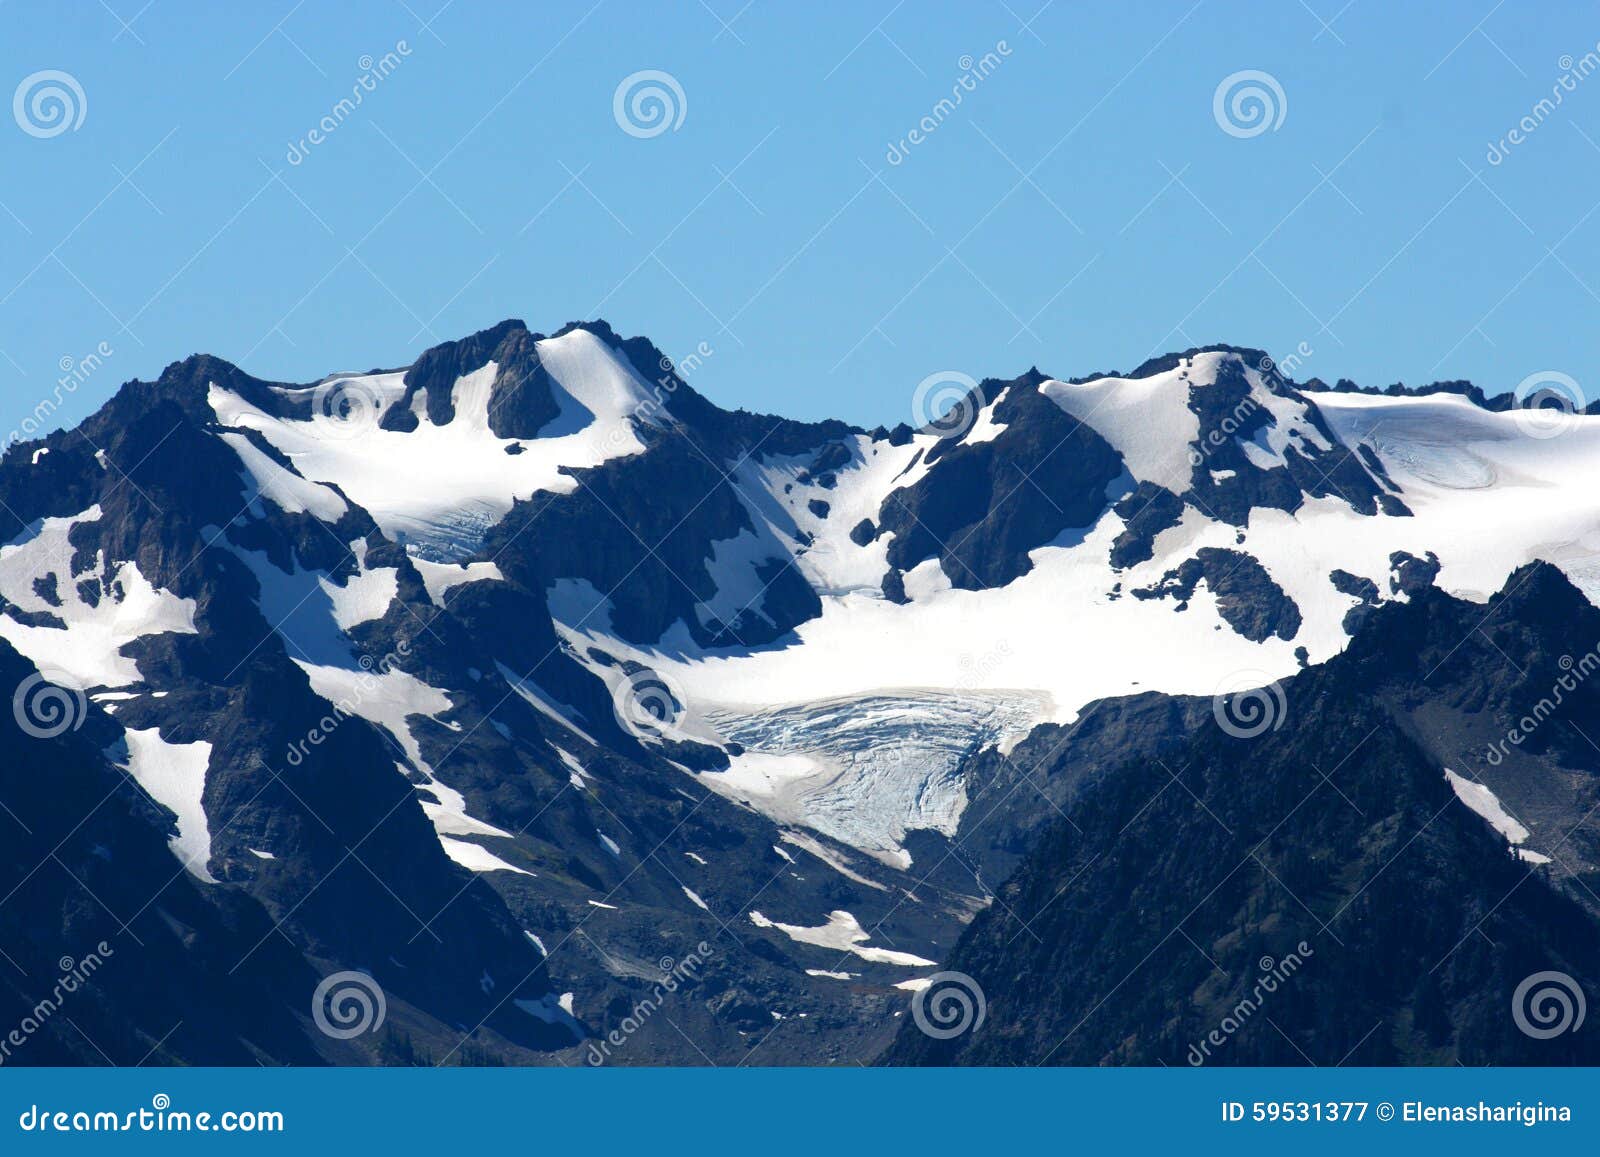 Mountain Peak with Snow Top Stock Image - Image of peak, park: 59531377